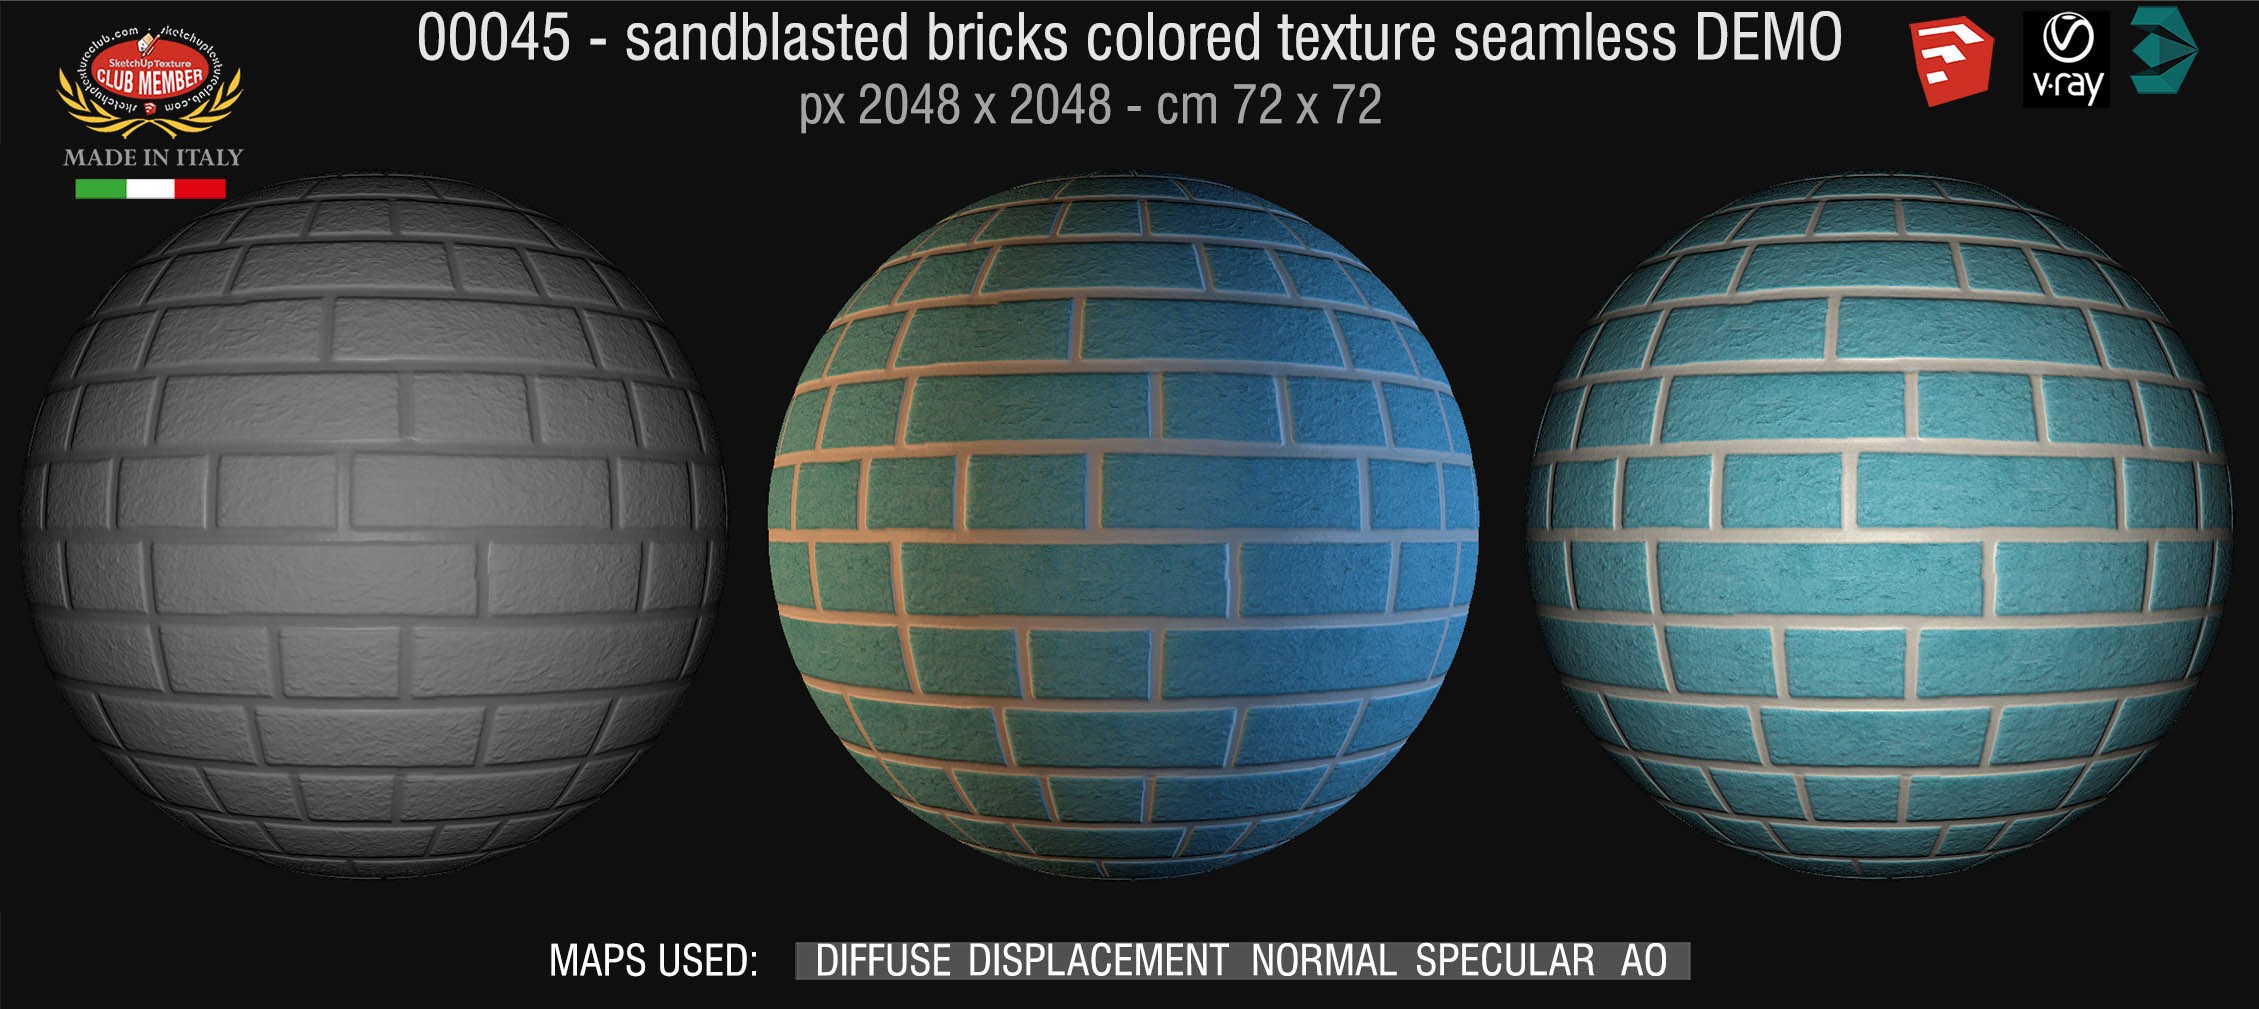 00045 Sandblasted bricks colored texture seamless + maps DEMO